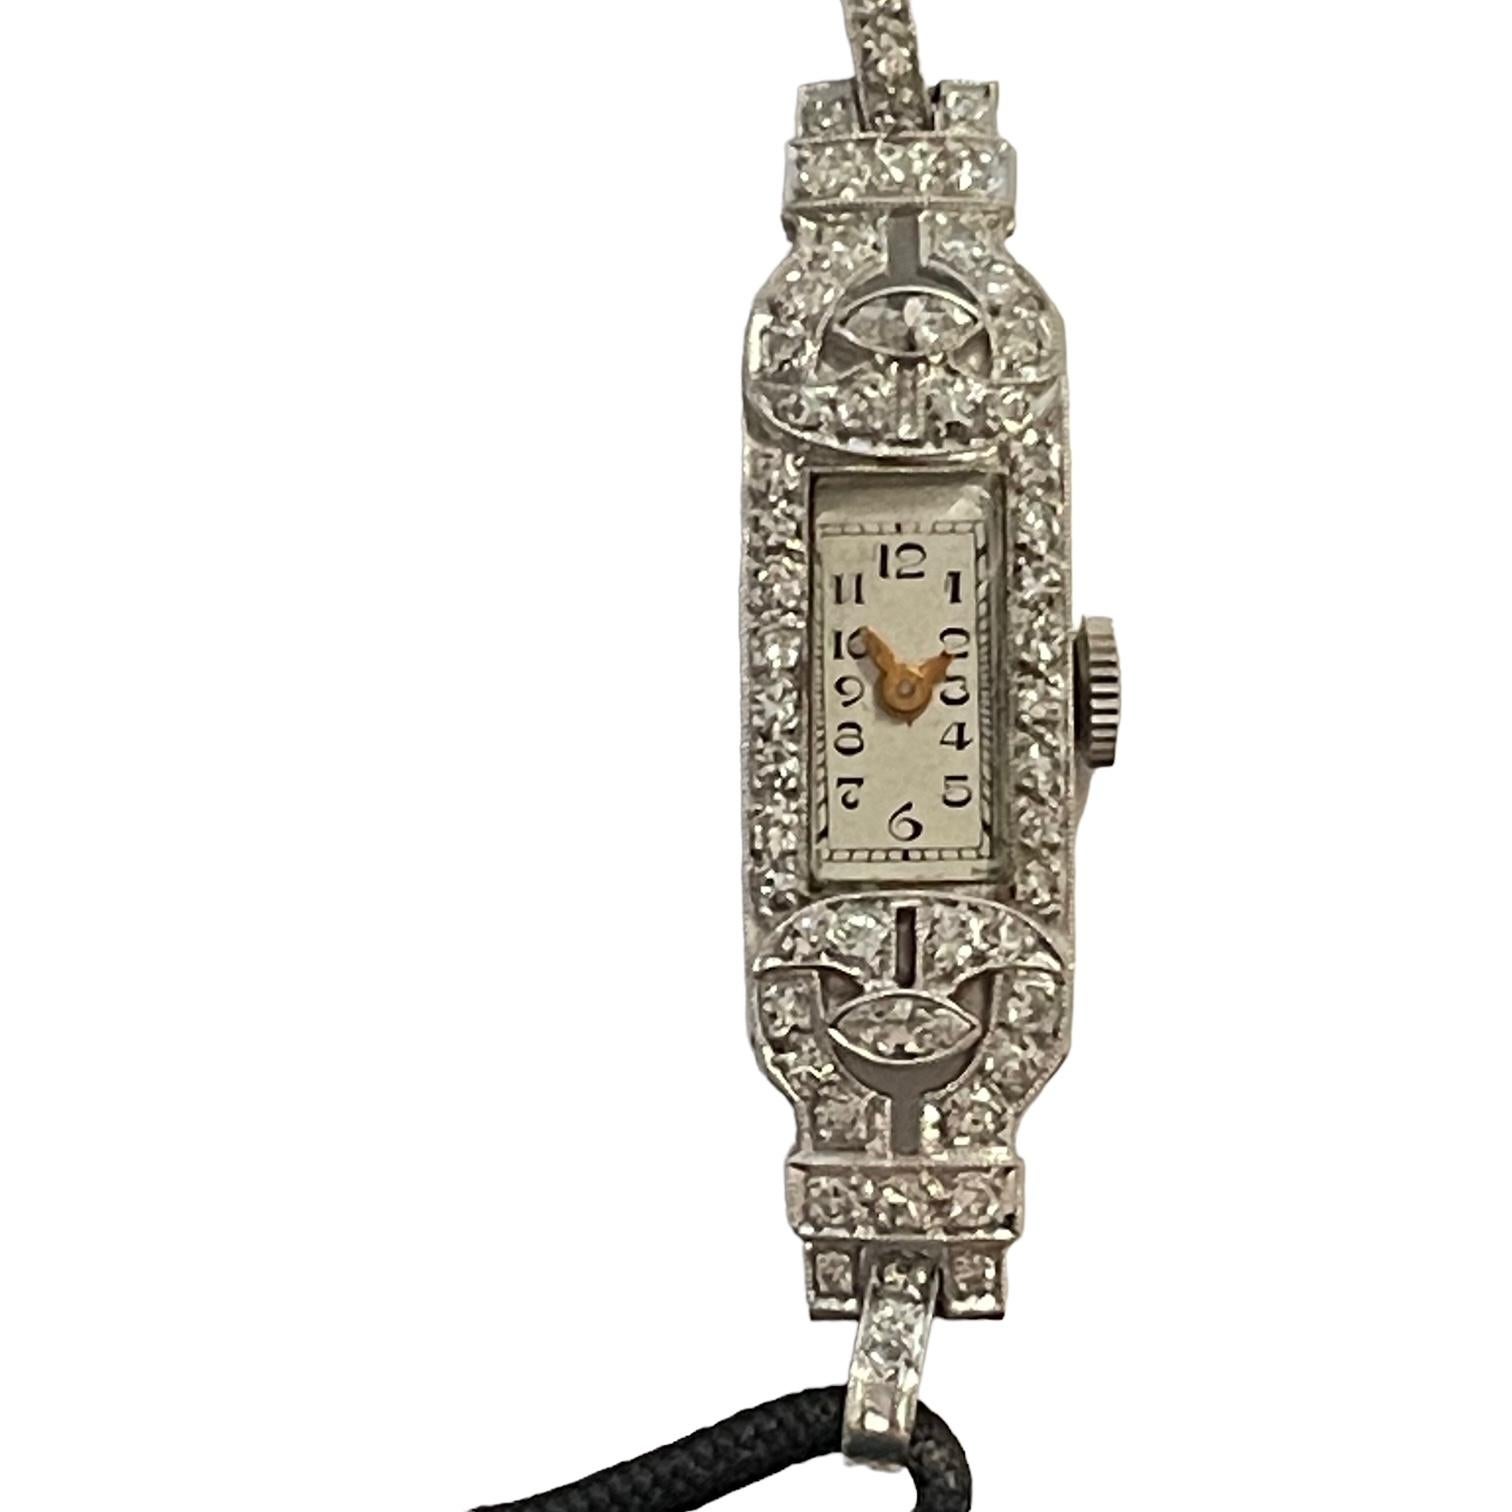 Vintage Platinum Diamond 17 Jewel Acoro Wrist Watch Bracelet Working Condition 8